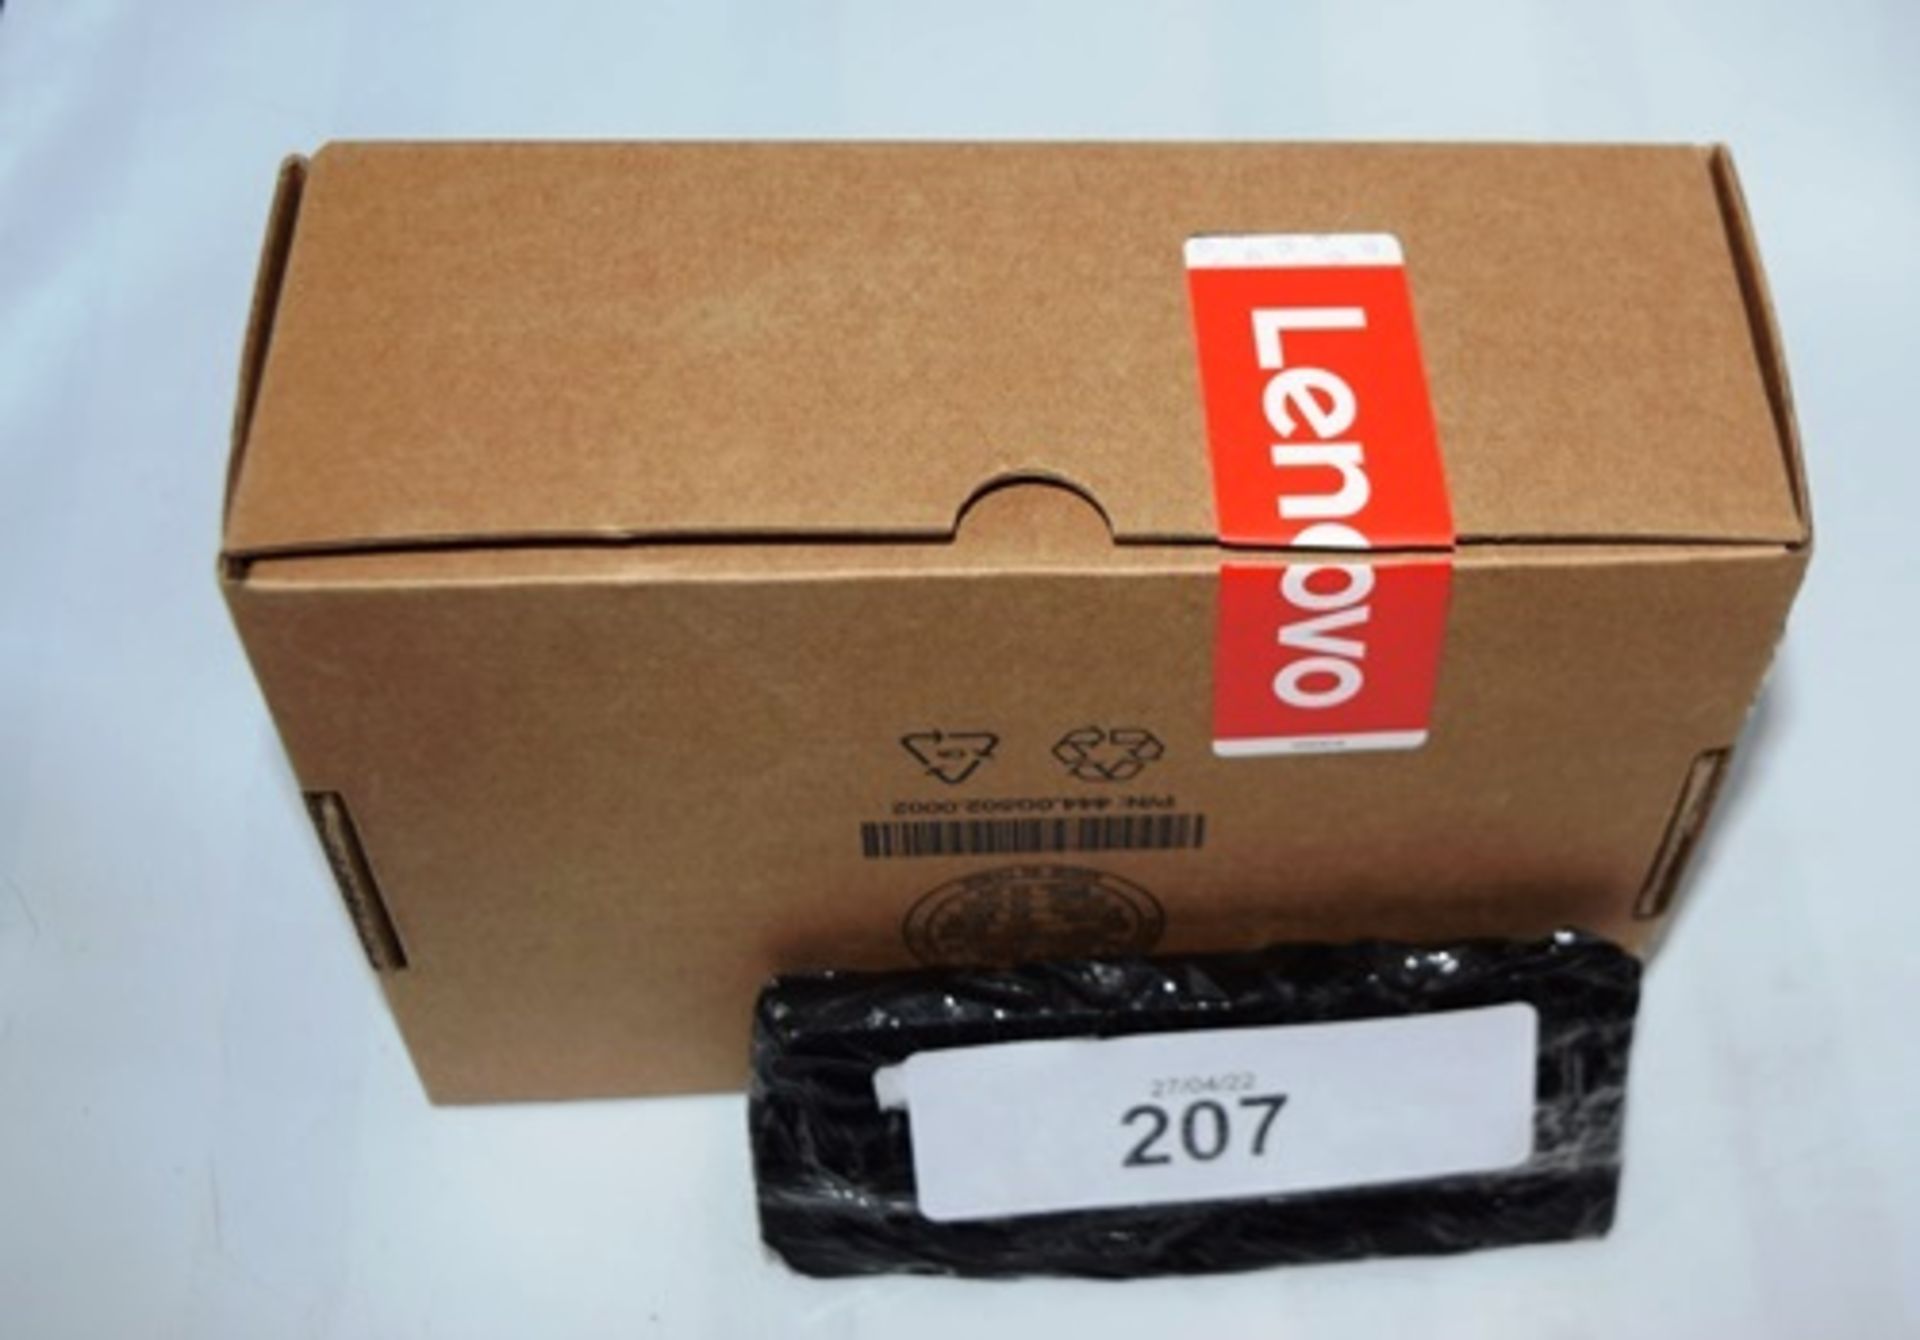 1 x Lenovo ThinkPad USB C Dock Gen 2 docking unit, P.N. 40AS009-OUK - New in box (FST2) - Image 2 of 2